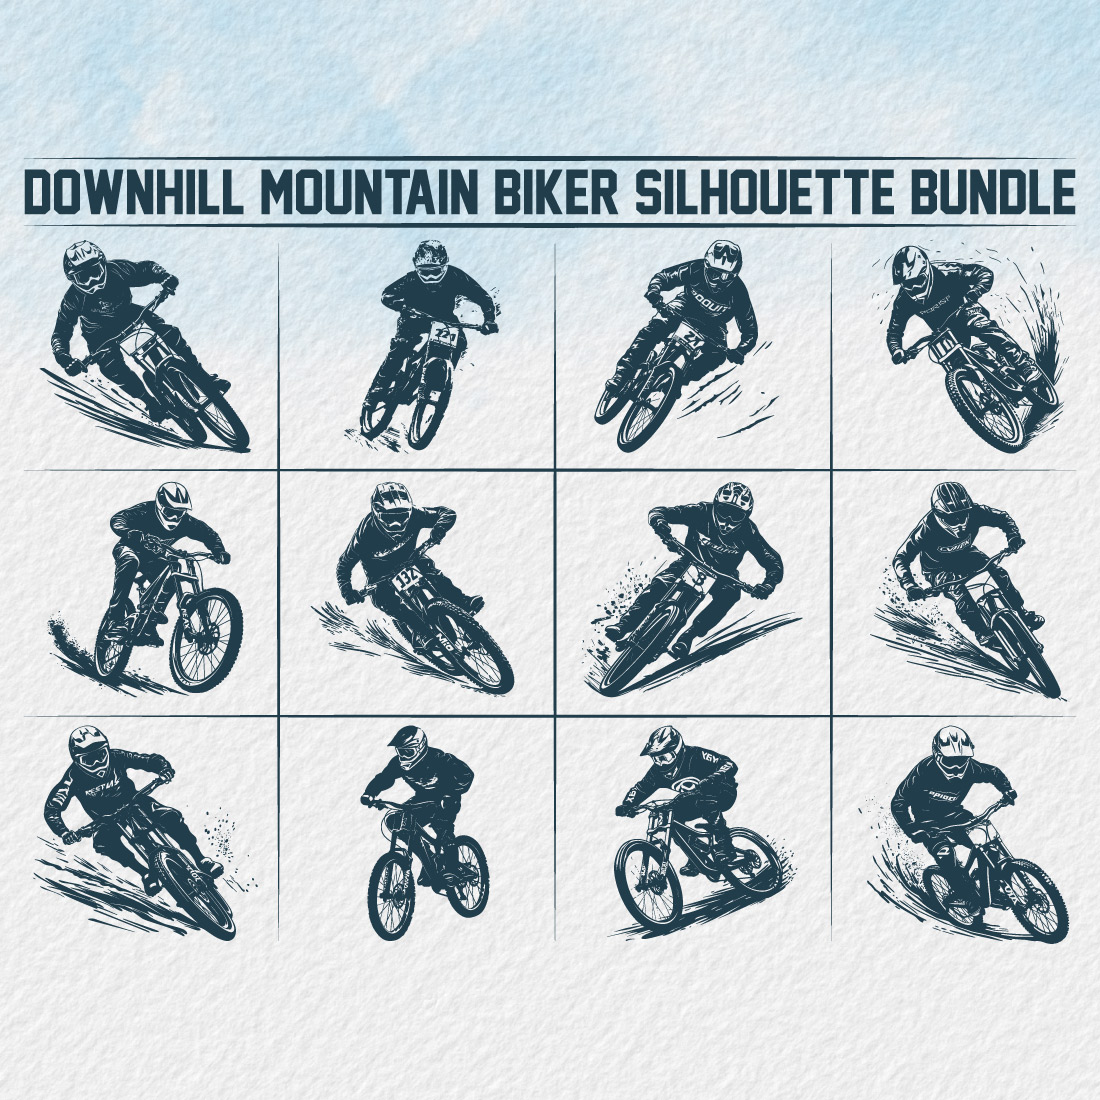 Downhill mountain biker silhouette bundle, Silhouette of a biker Downhill mountain biking Bicycle background with silhouette of downhill riders in mountain cover image.